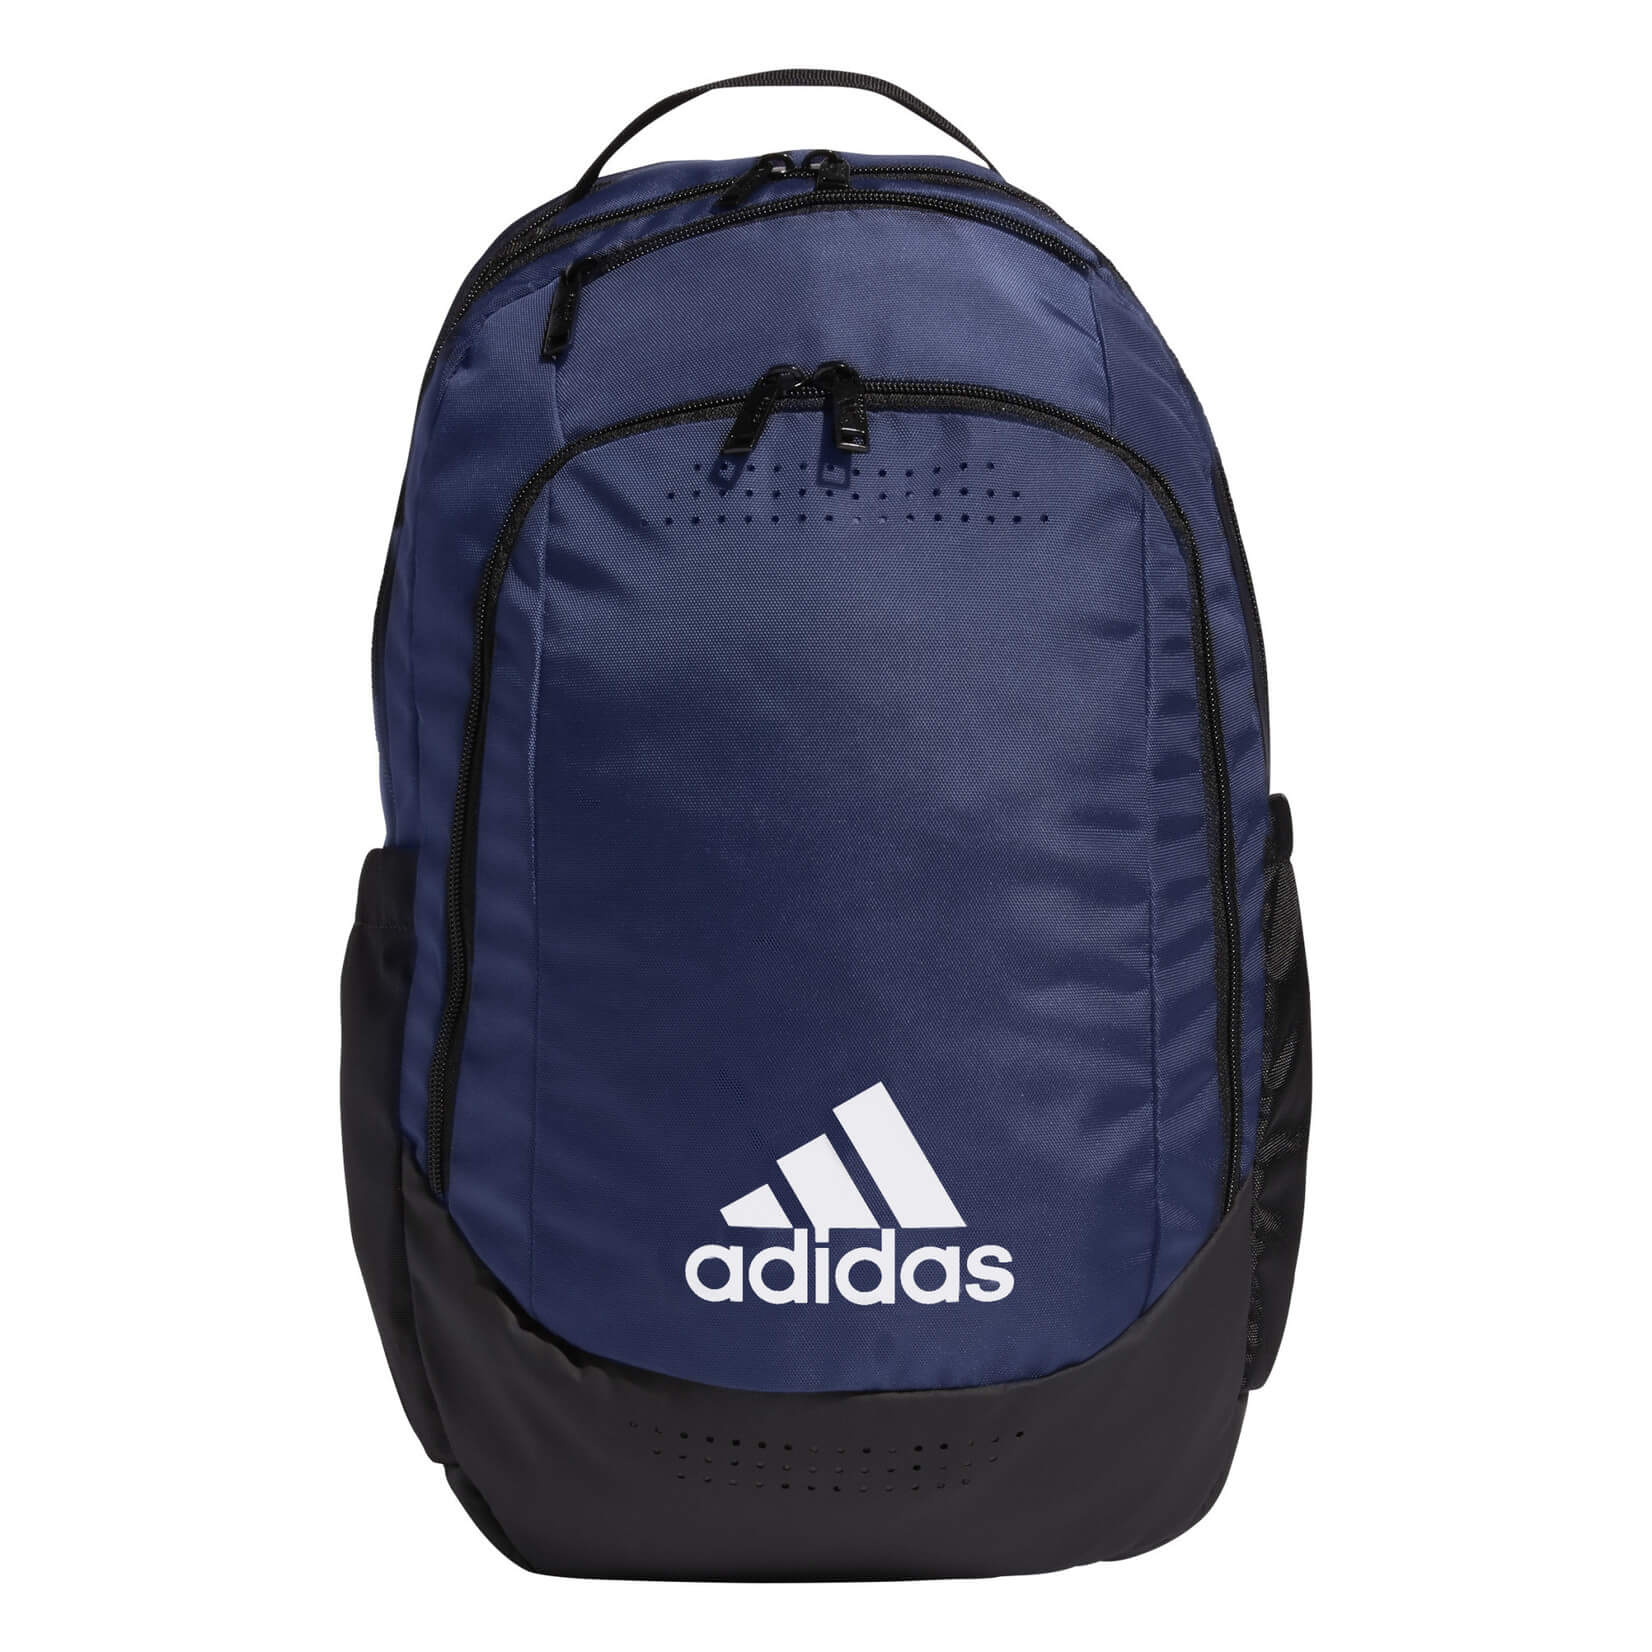 adidas Defender Backpack Team Navy Blue